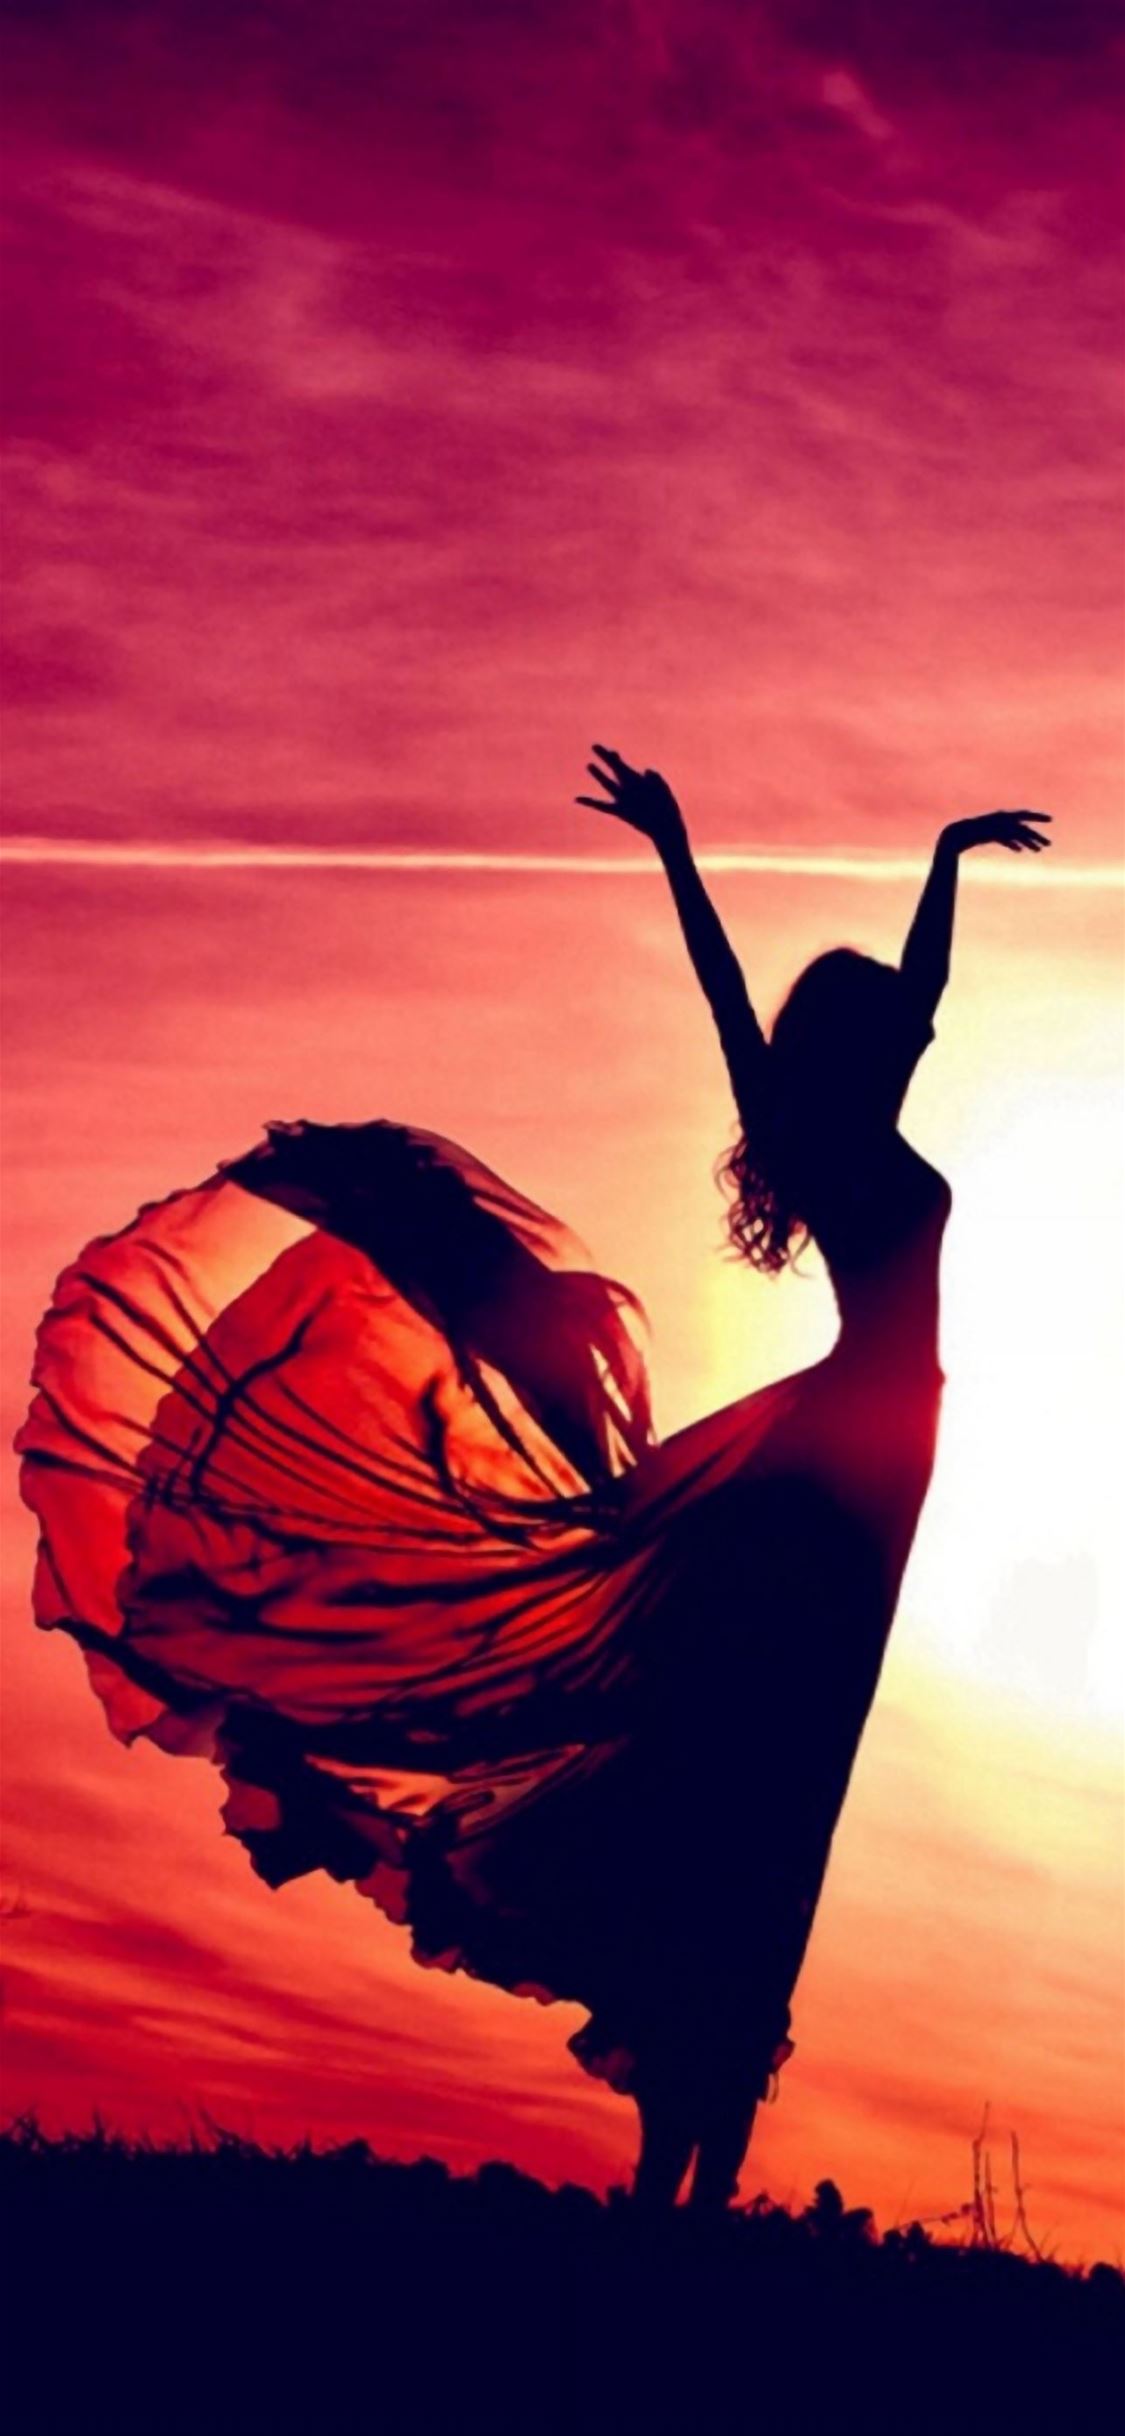 Aesthetic Dancing Sunshine Beauty Girl iPhone Wallpapers Free Download